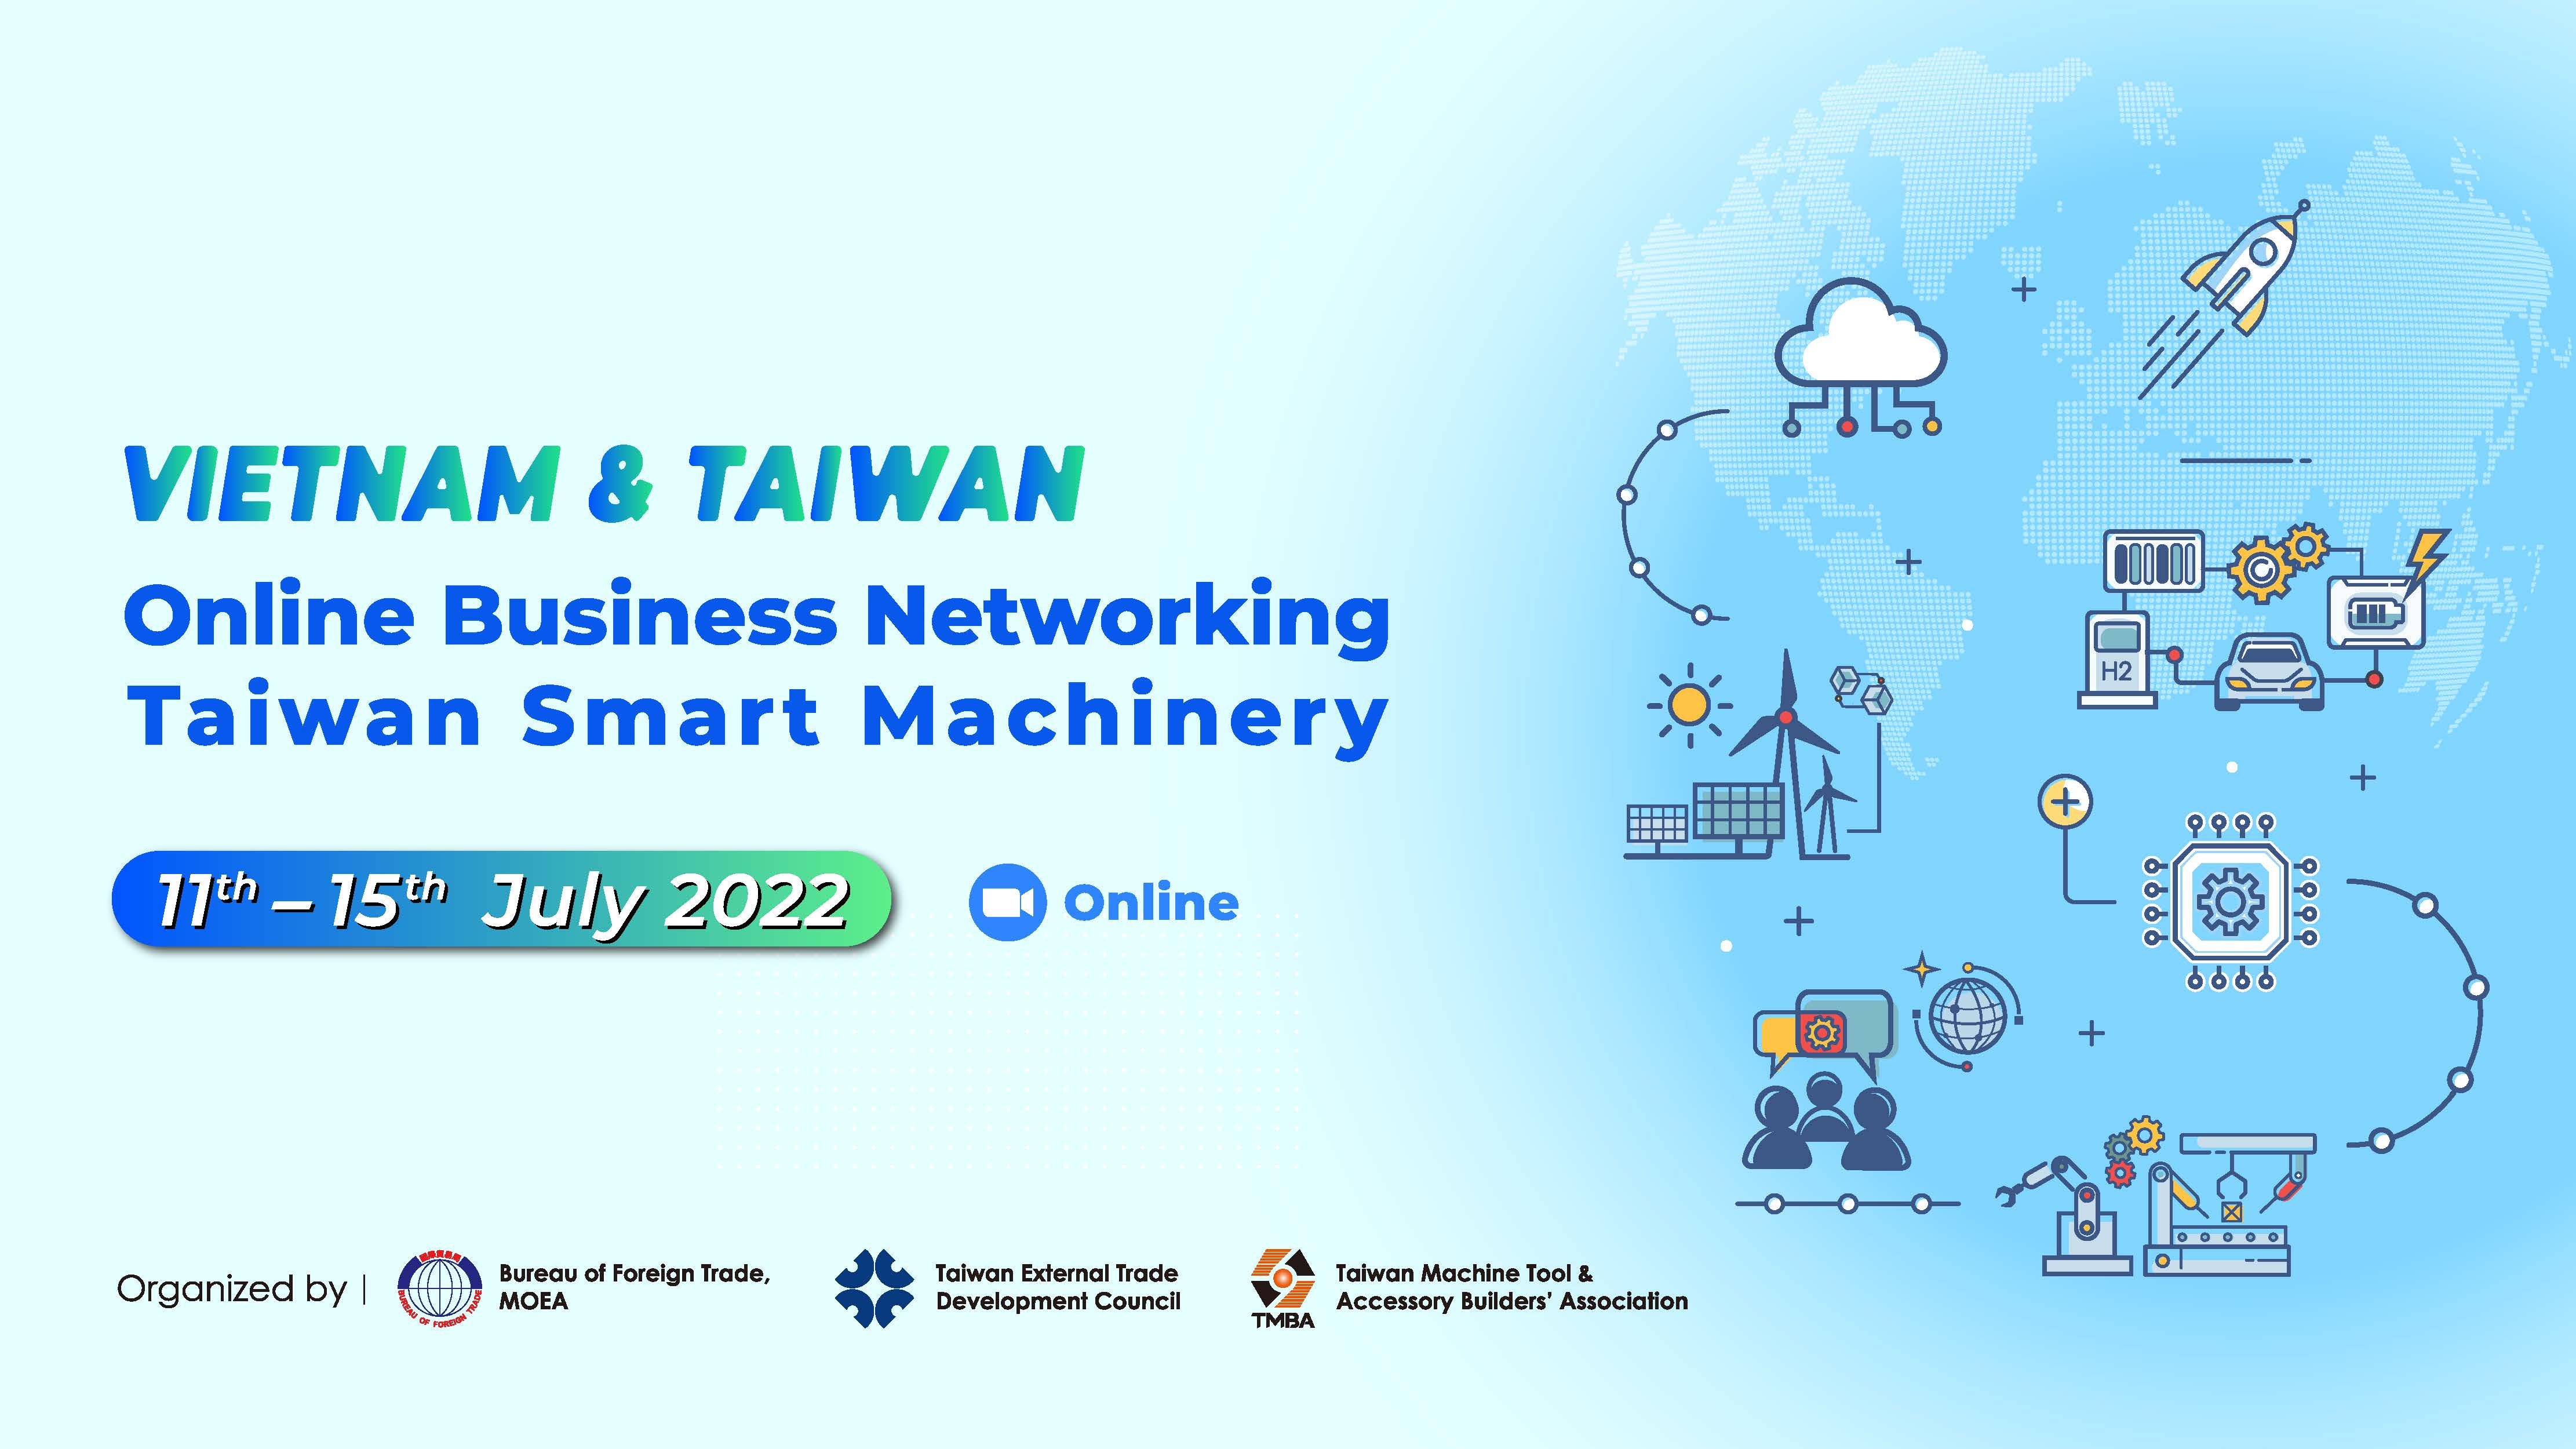 Vietnam & Taiwan Online Business Networking